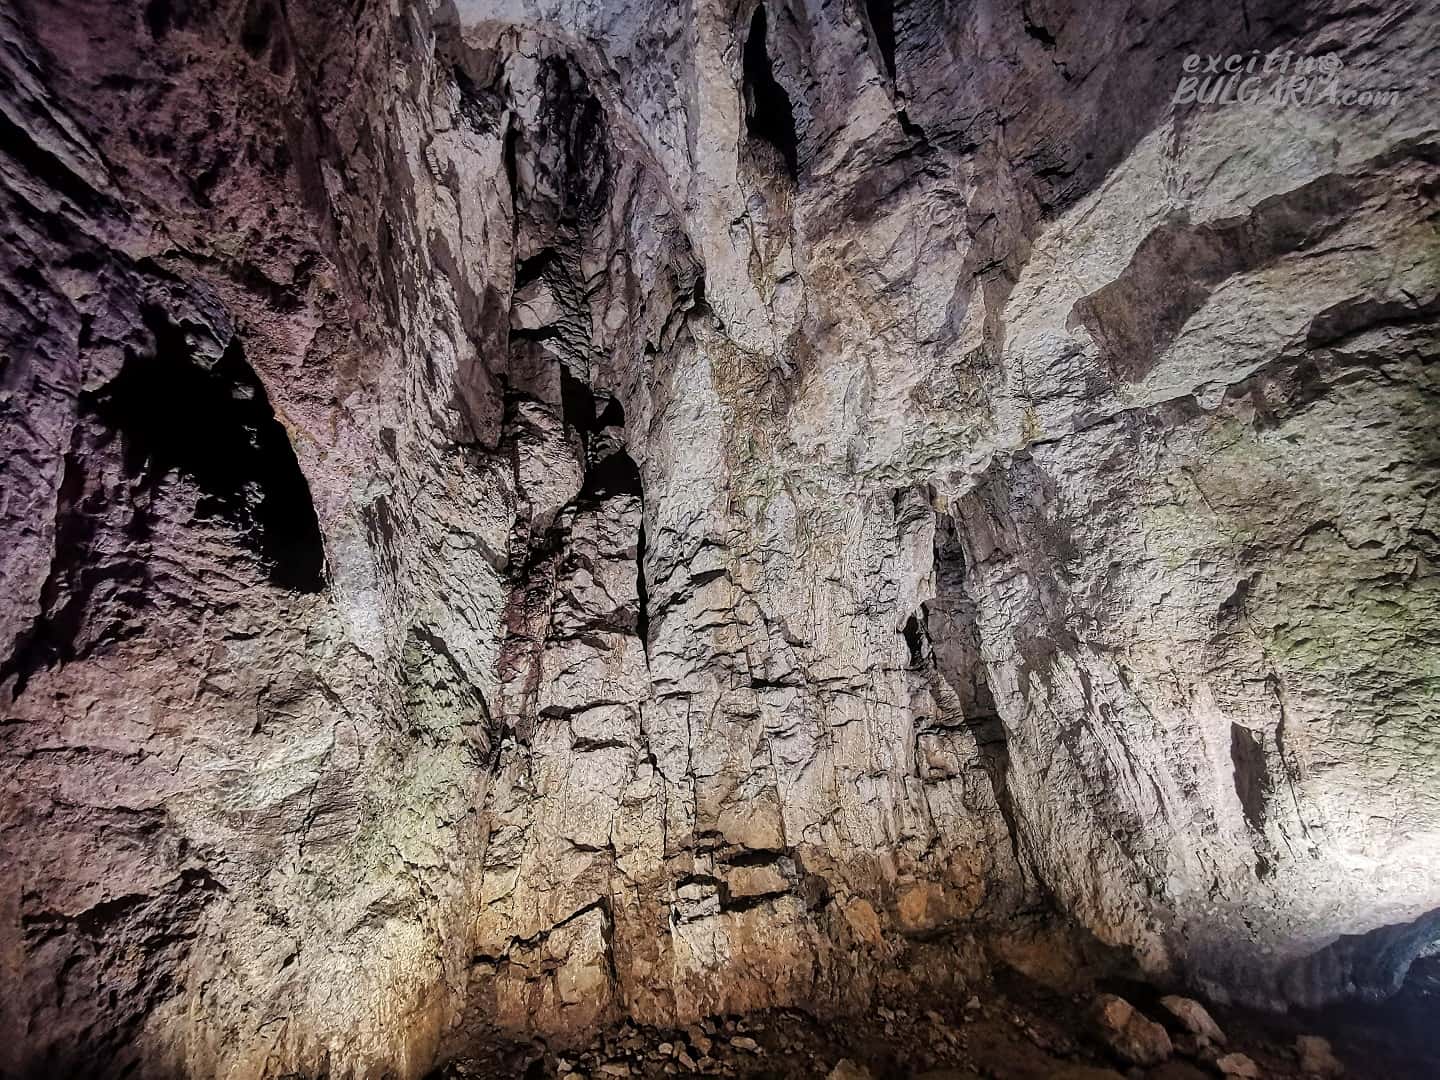 Inside the Bacho Kiro cave